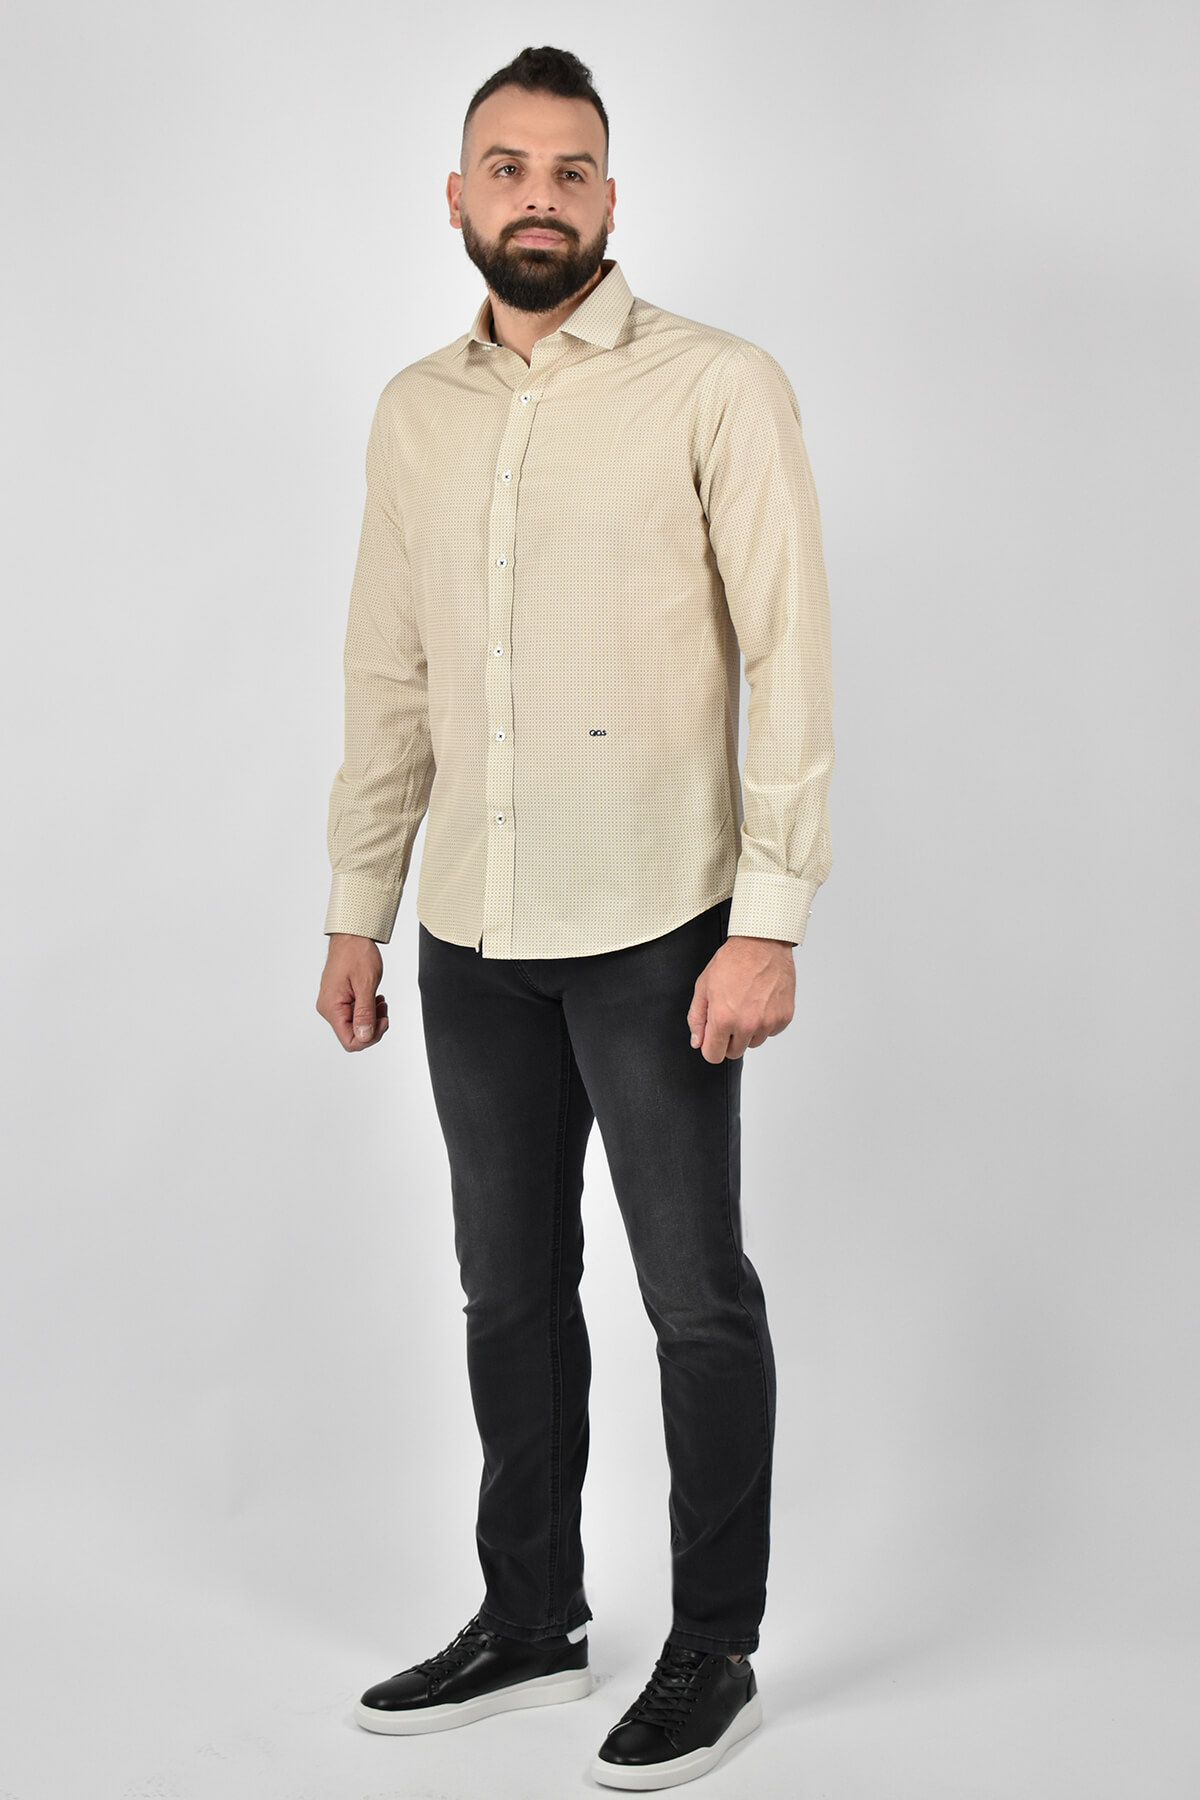 GioS Shirt S-Maroko